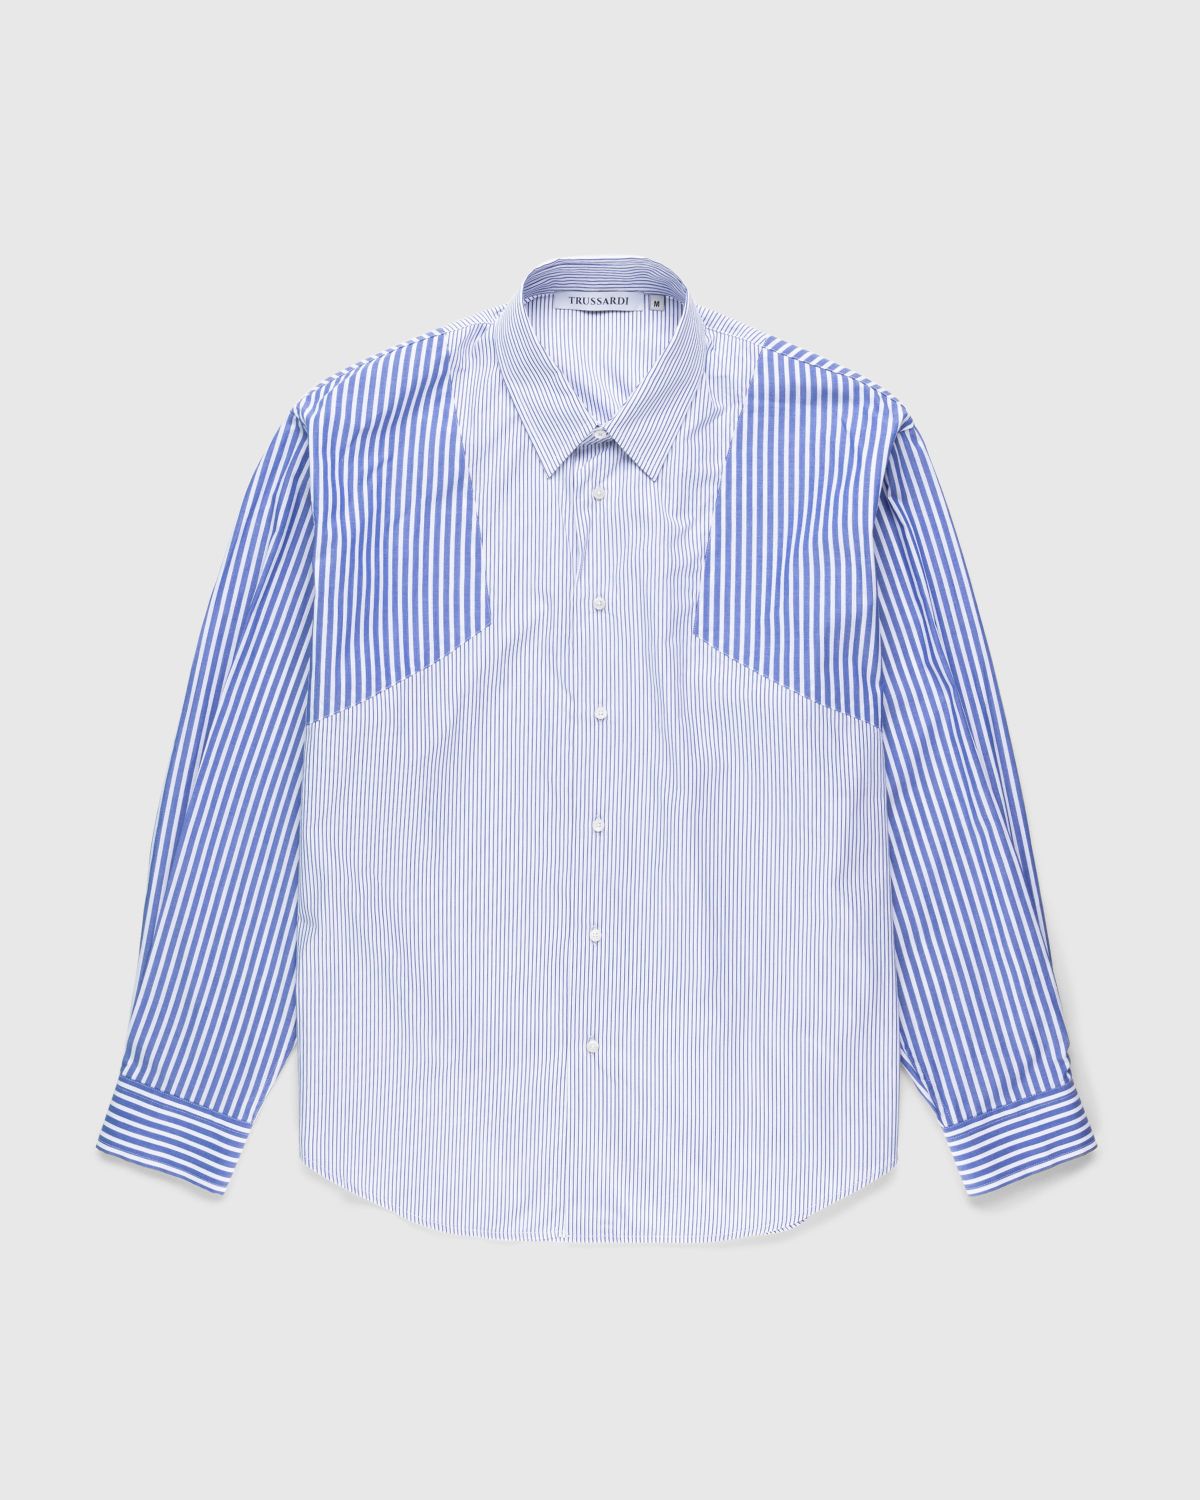 Trussardi – Shirt Cotton Mix Stripes | Highsnobiety Shop